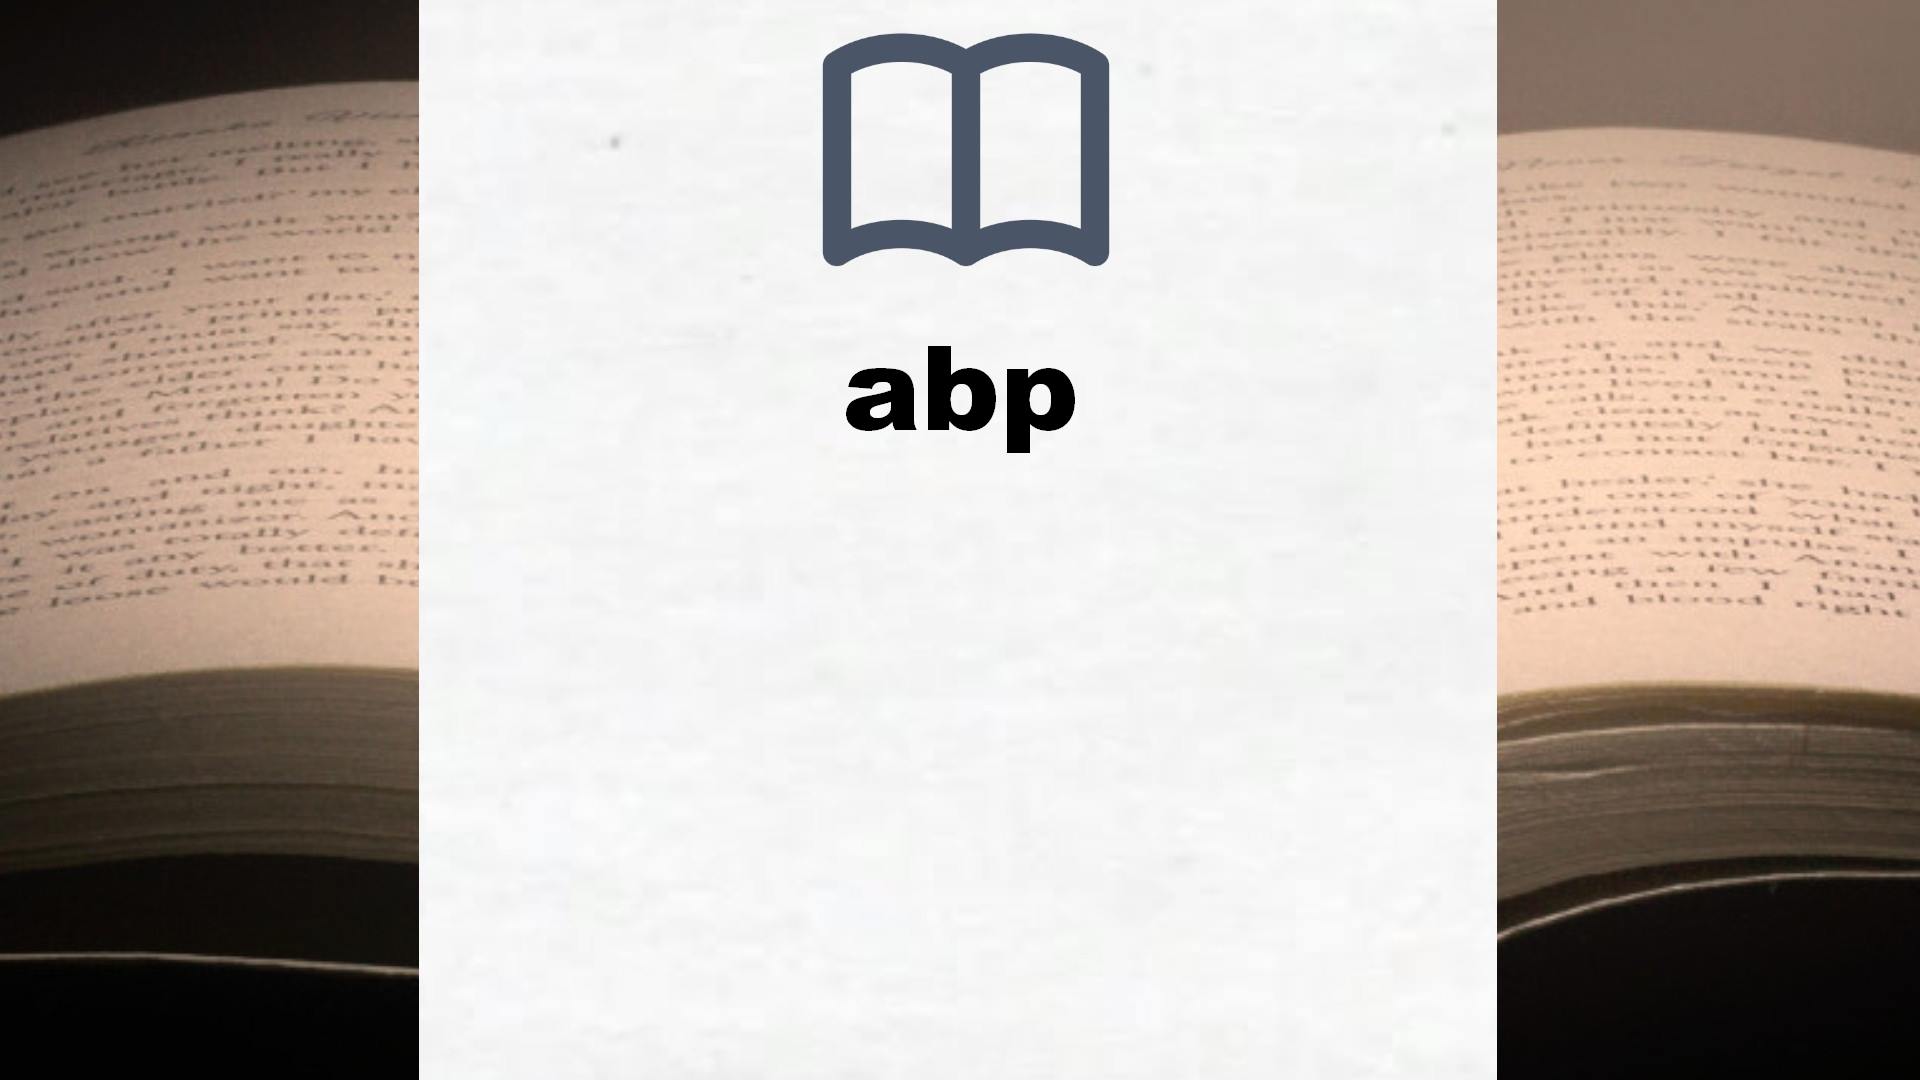 Libros sobre abp